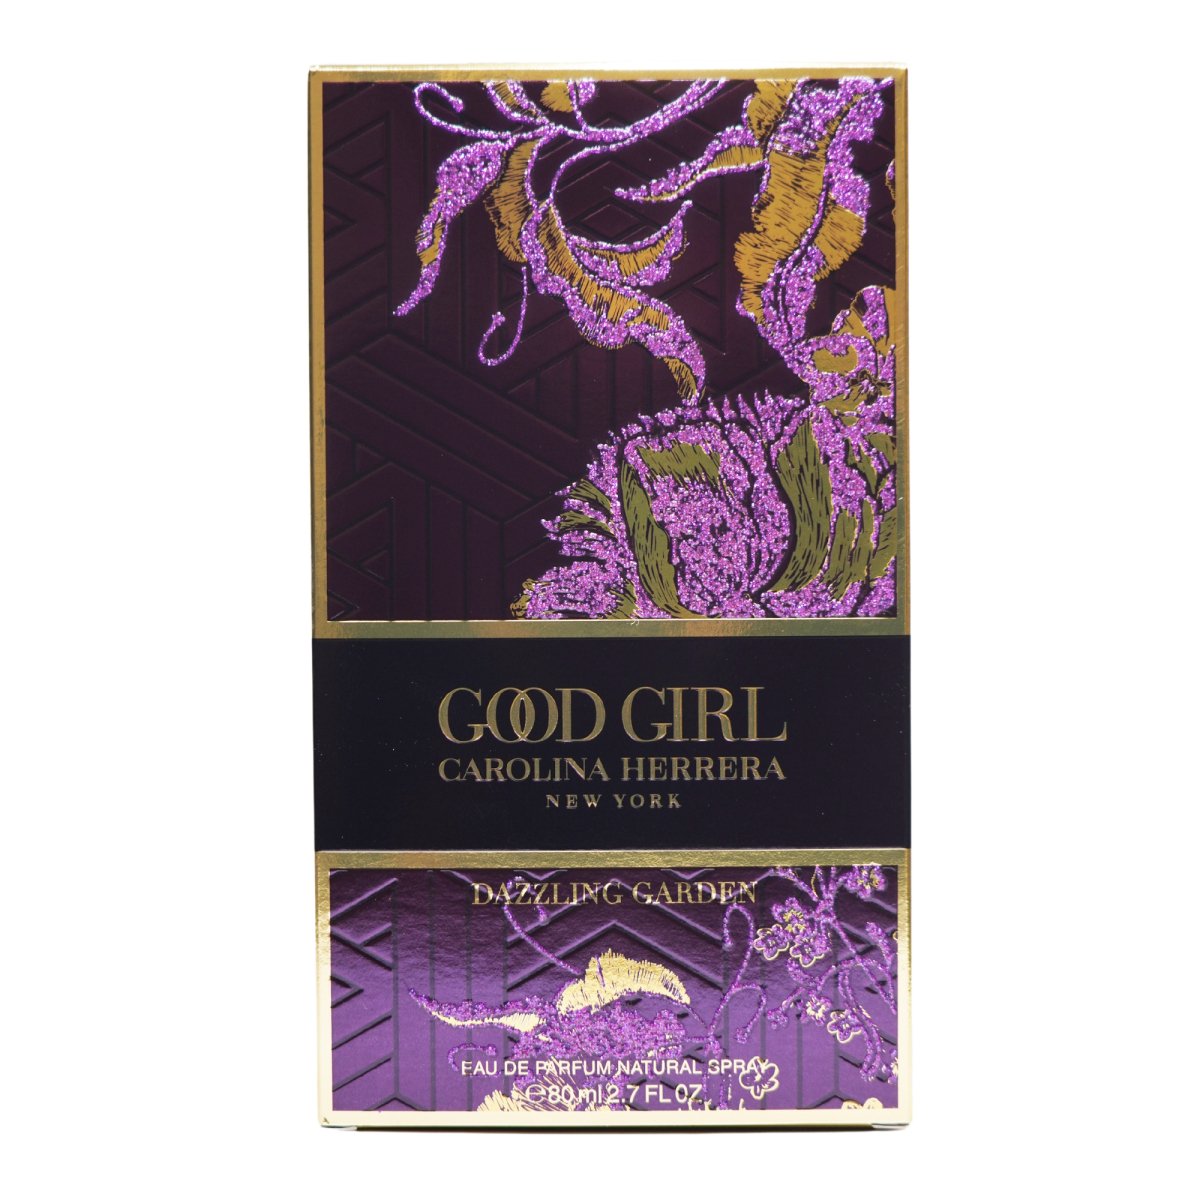 Good Girl Eau de Parfum Dazzling Garden Limited-Edition - Perfume Headquarters - Carolina Herrera - Fragrance